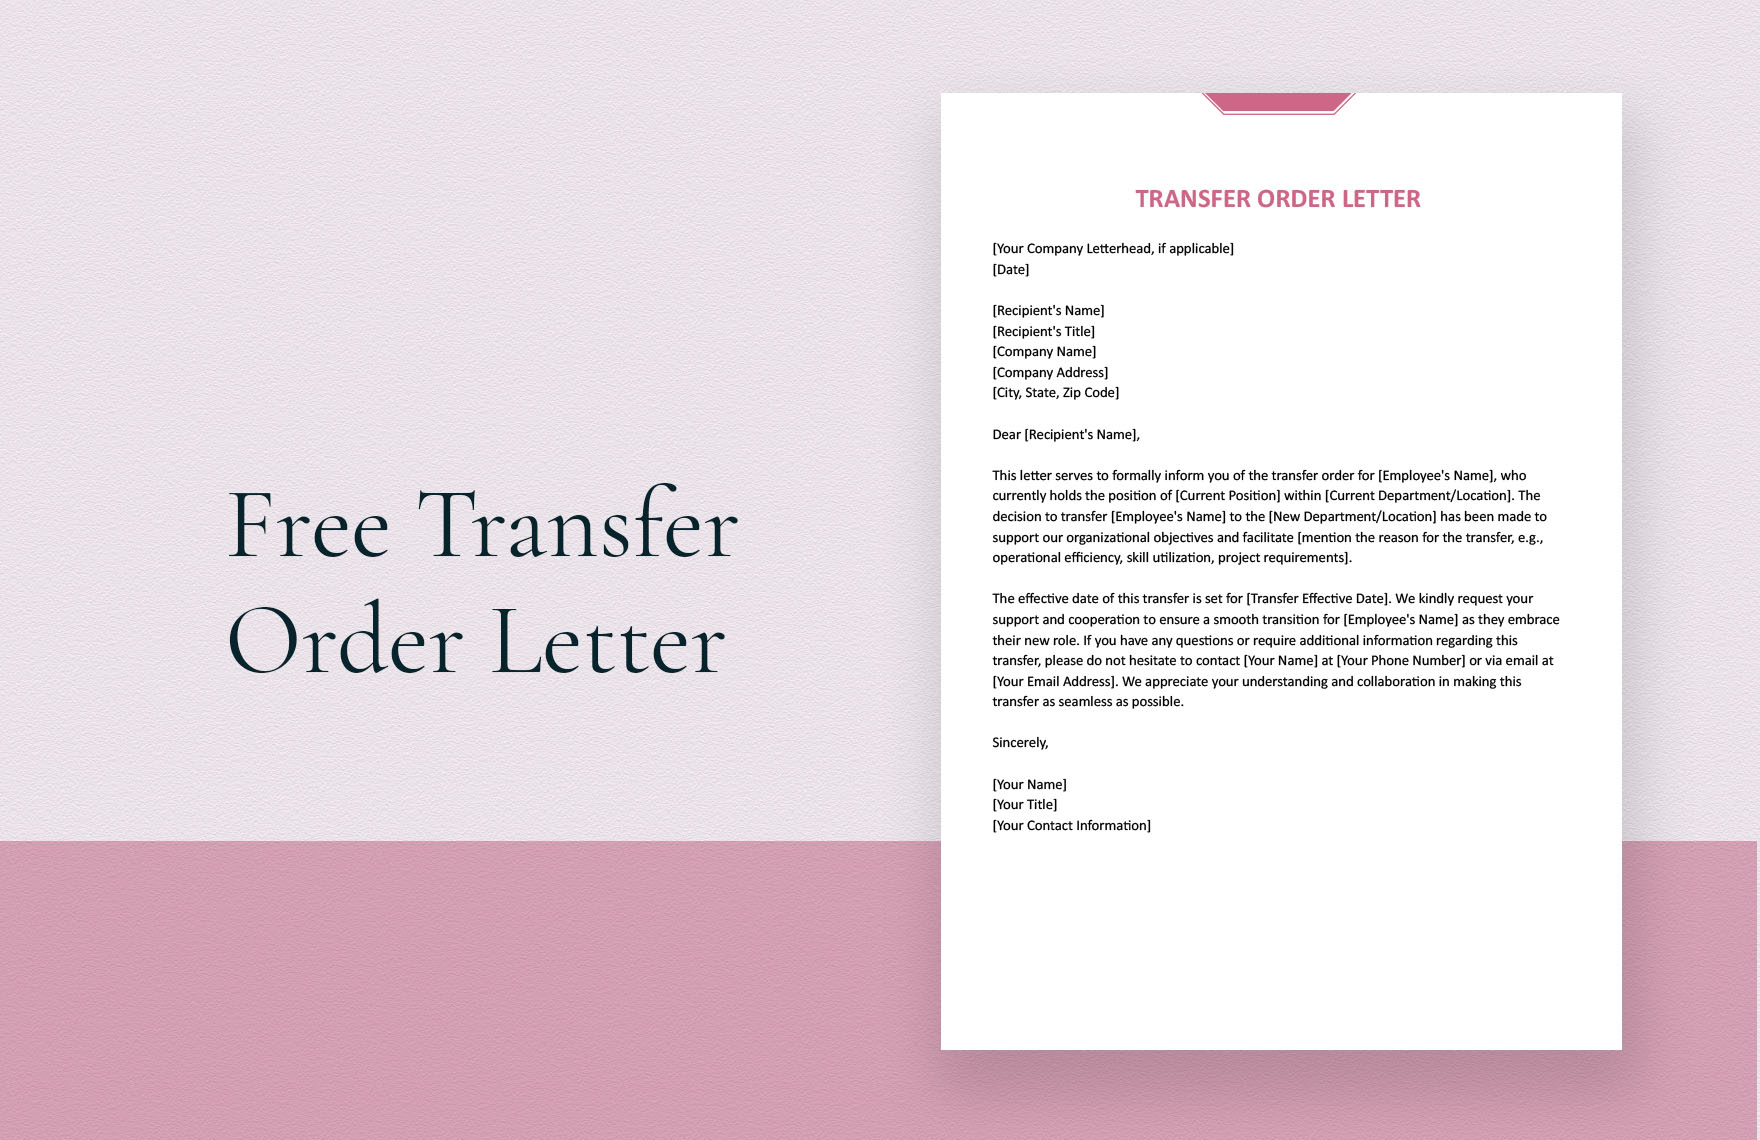 Transfer Order Letter in Word, Google Docs